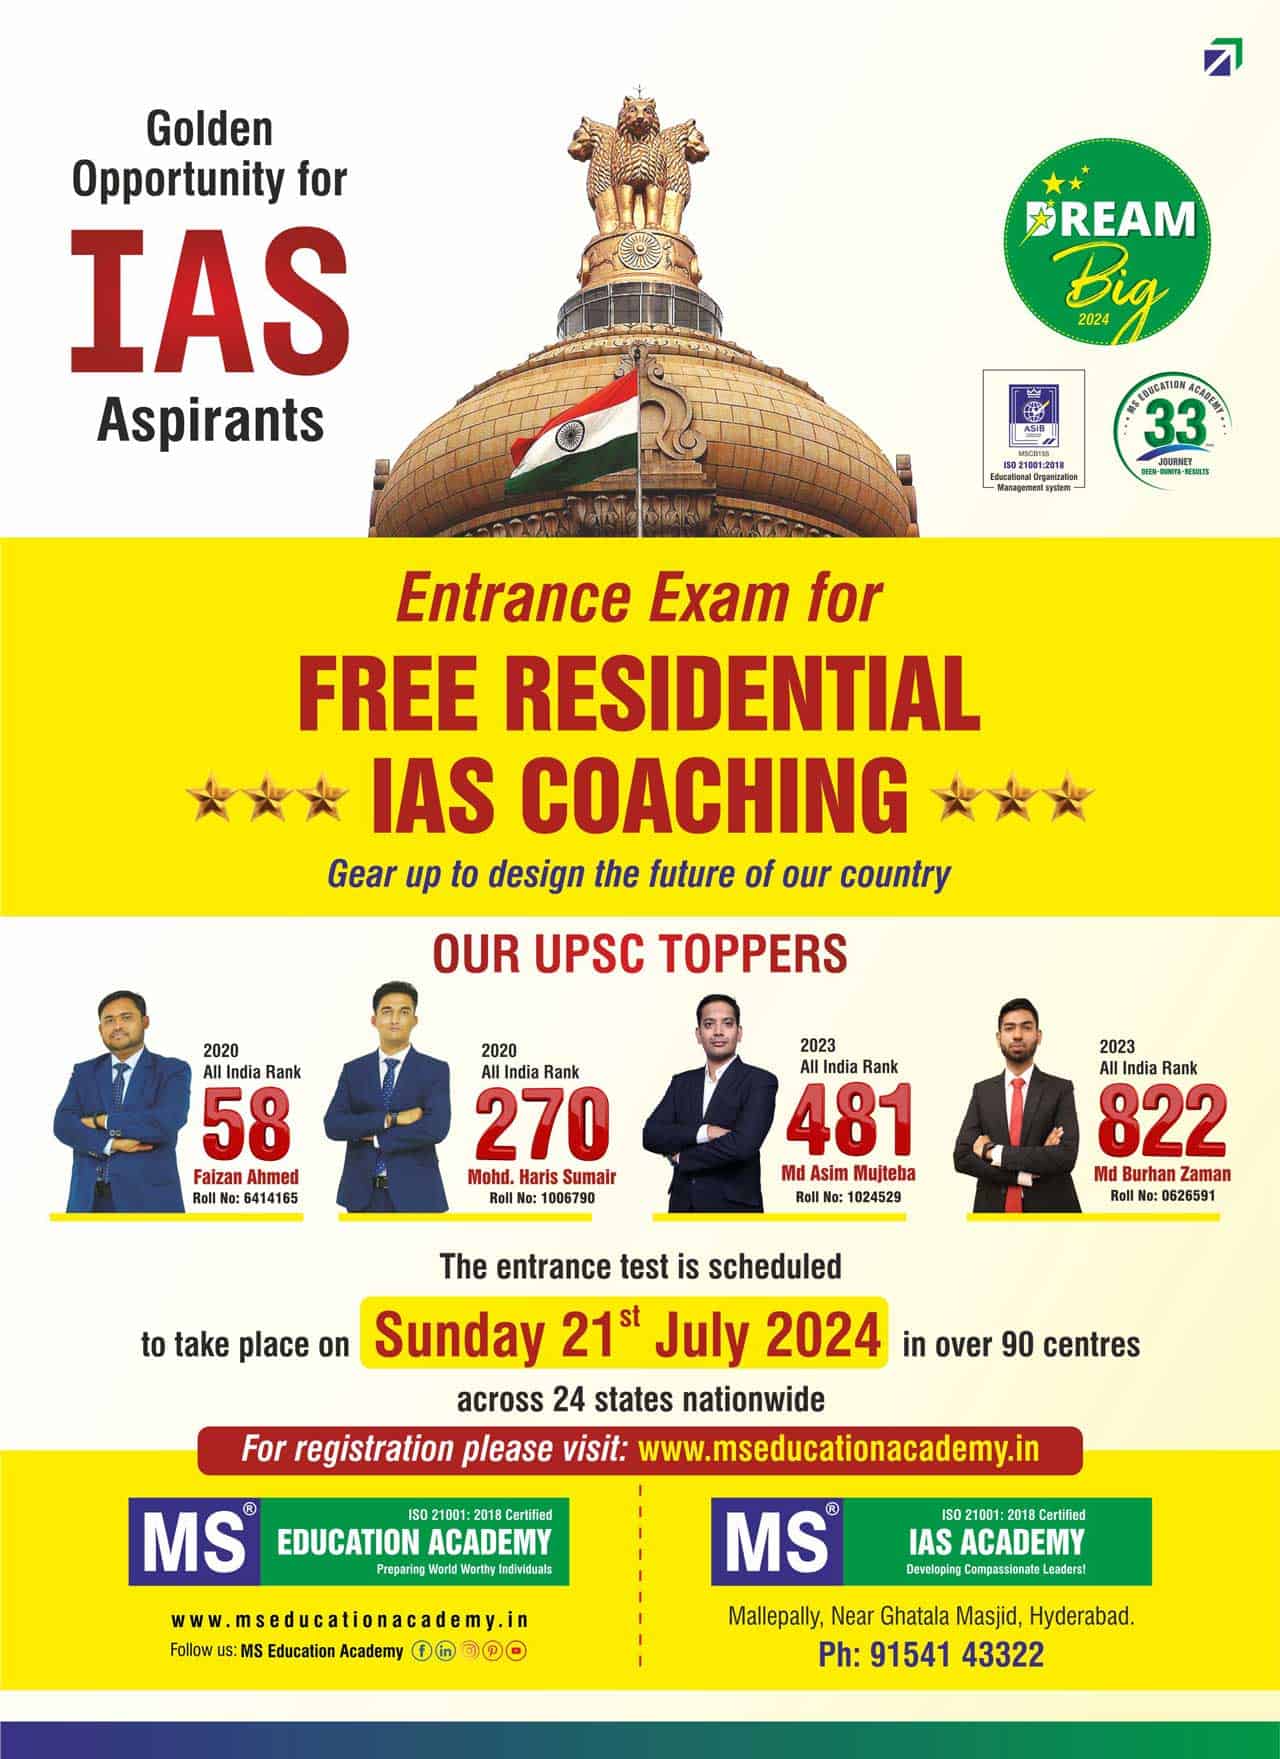 MS IAS Academy Entrance Exam 2024 Handbill